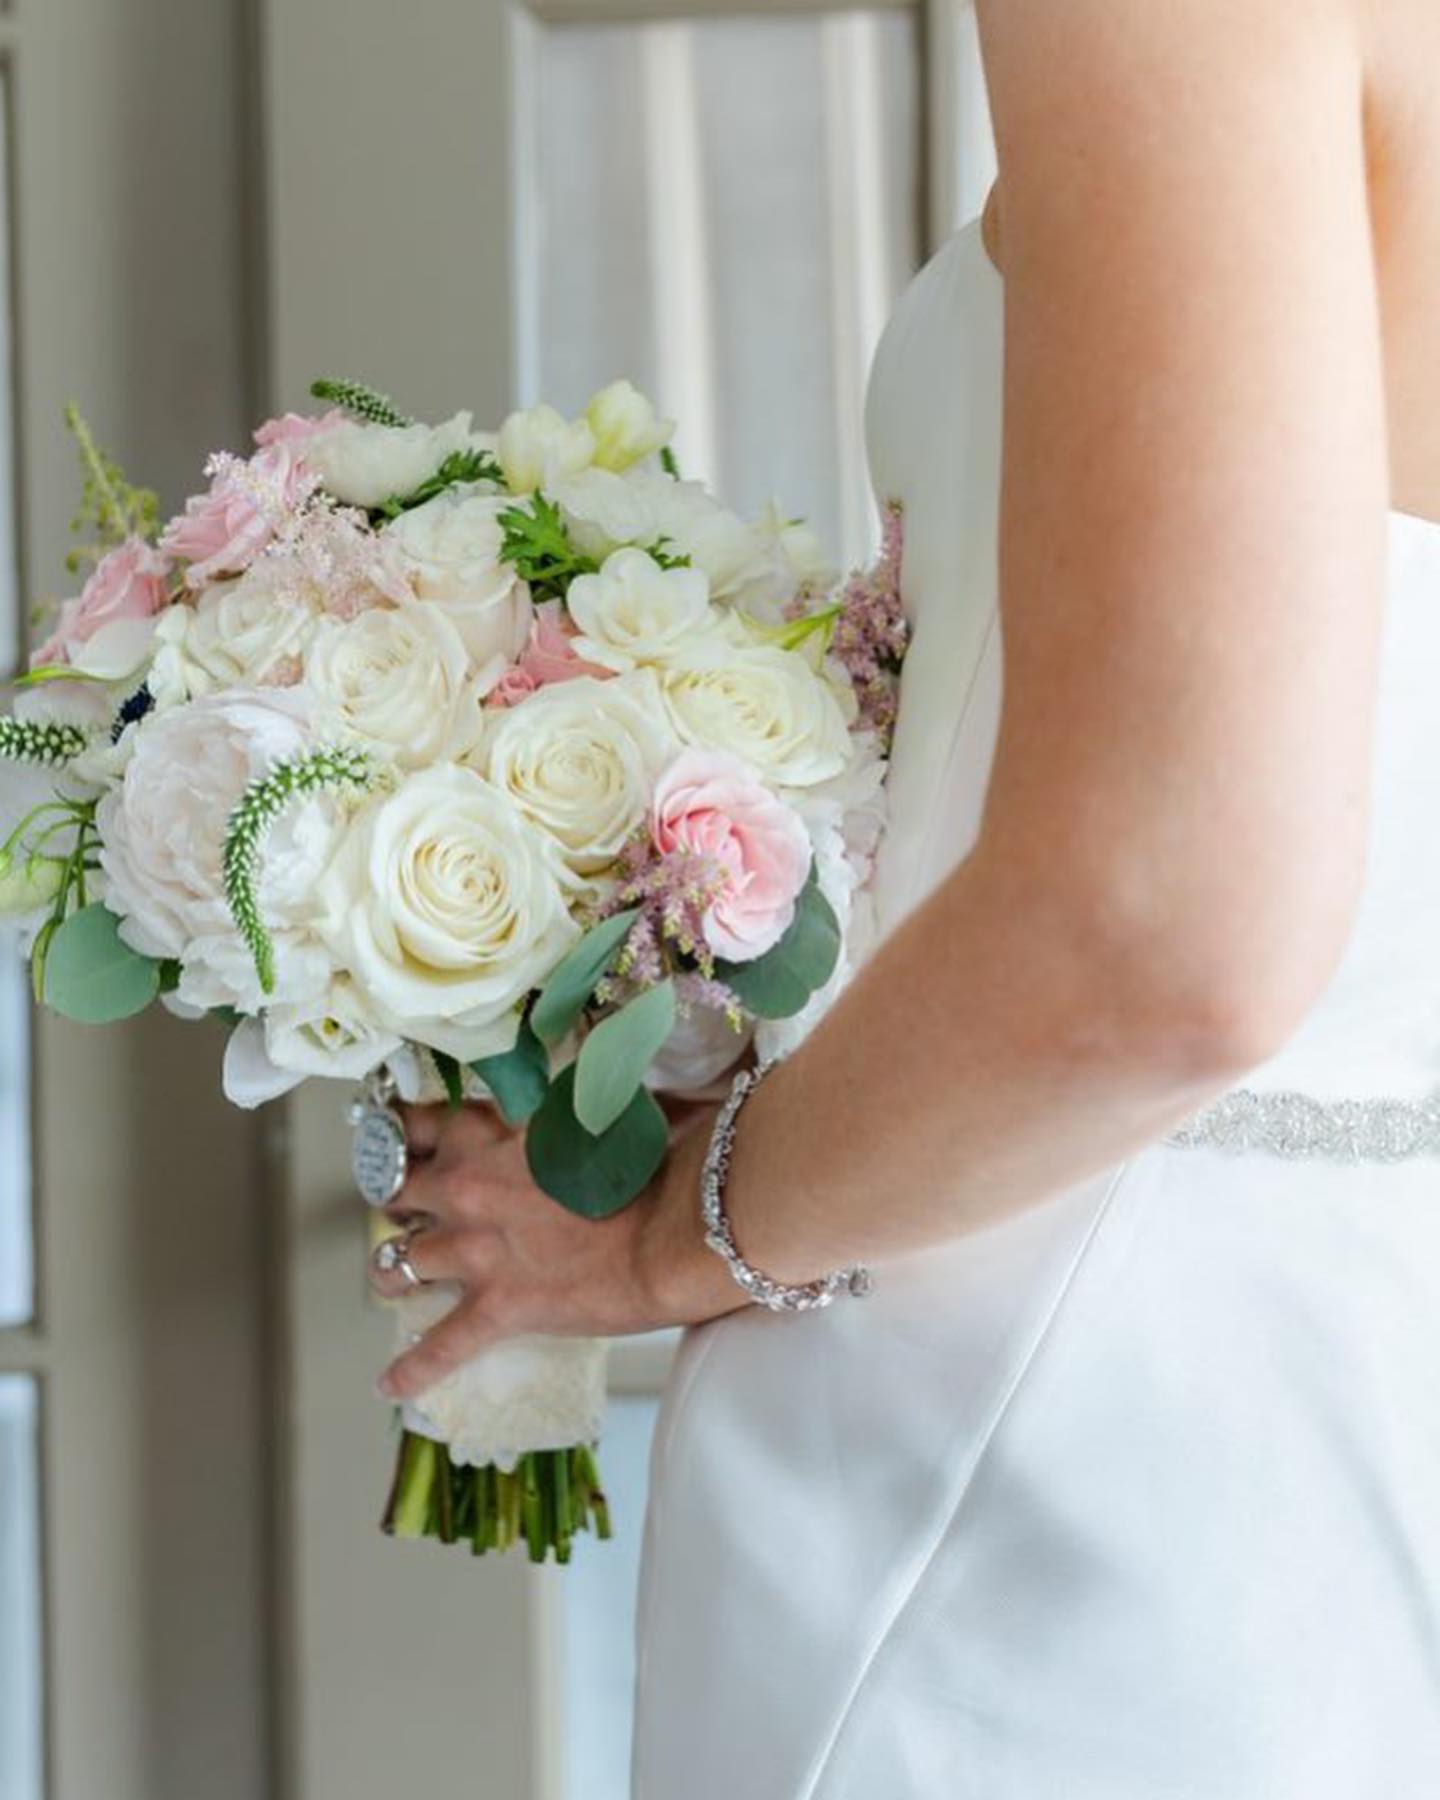 Bride in Wedding Dress Holding Bouquet